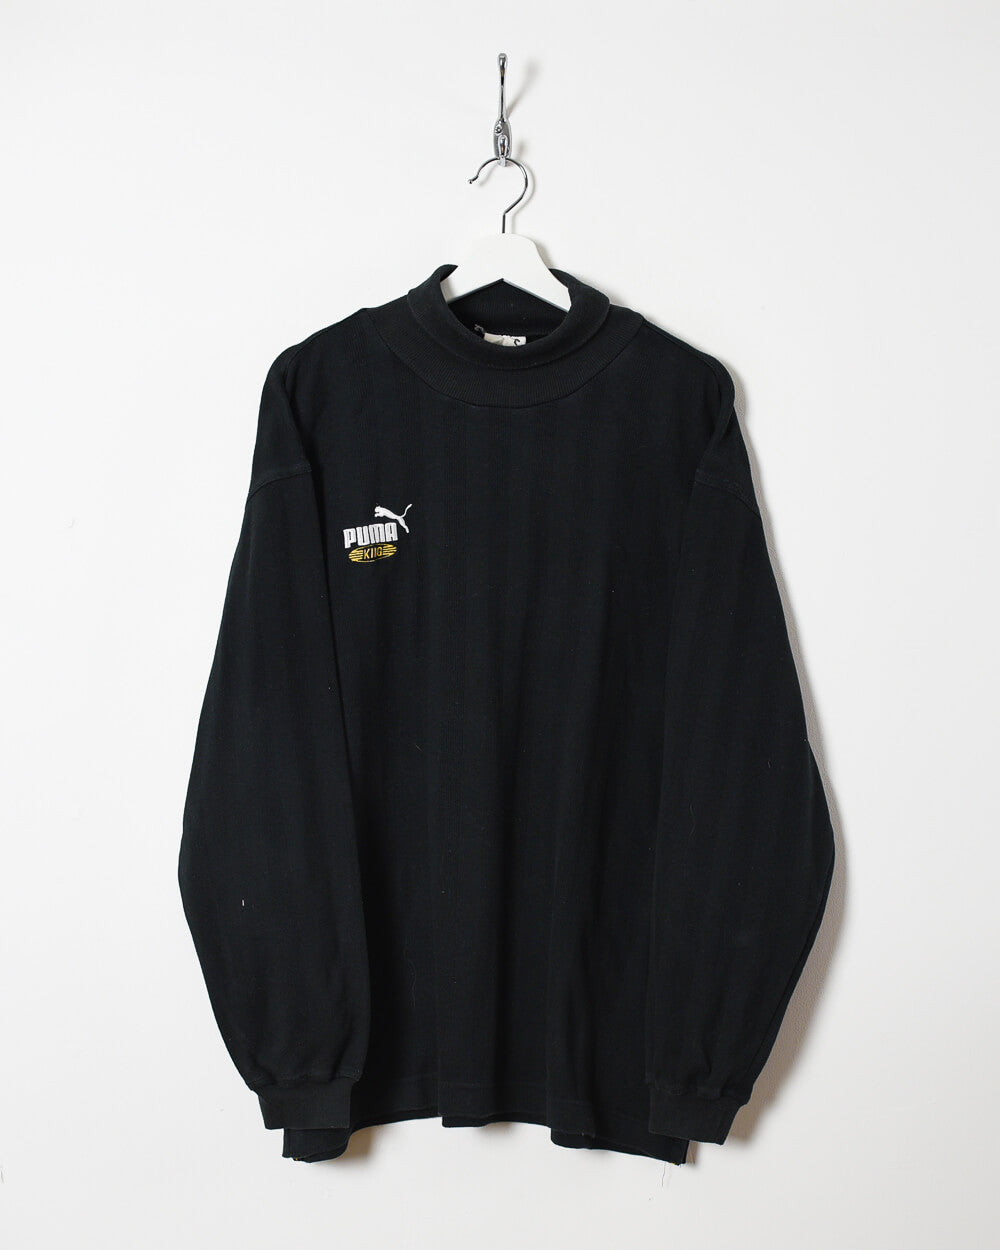 Black Puma King Turtle Neck Sweatshirt - Large